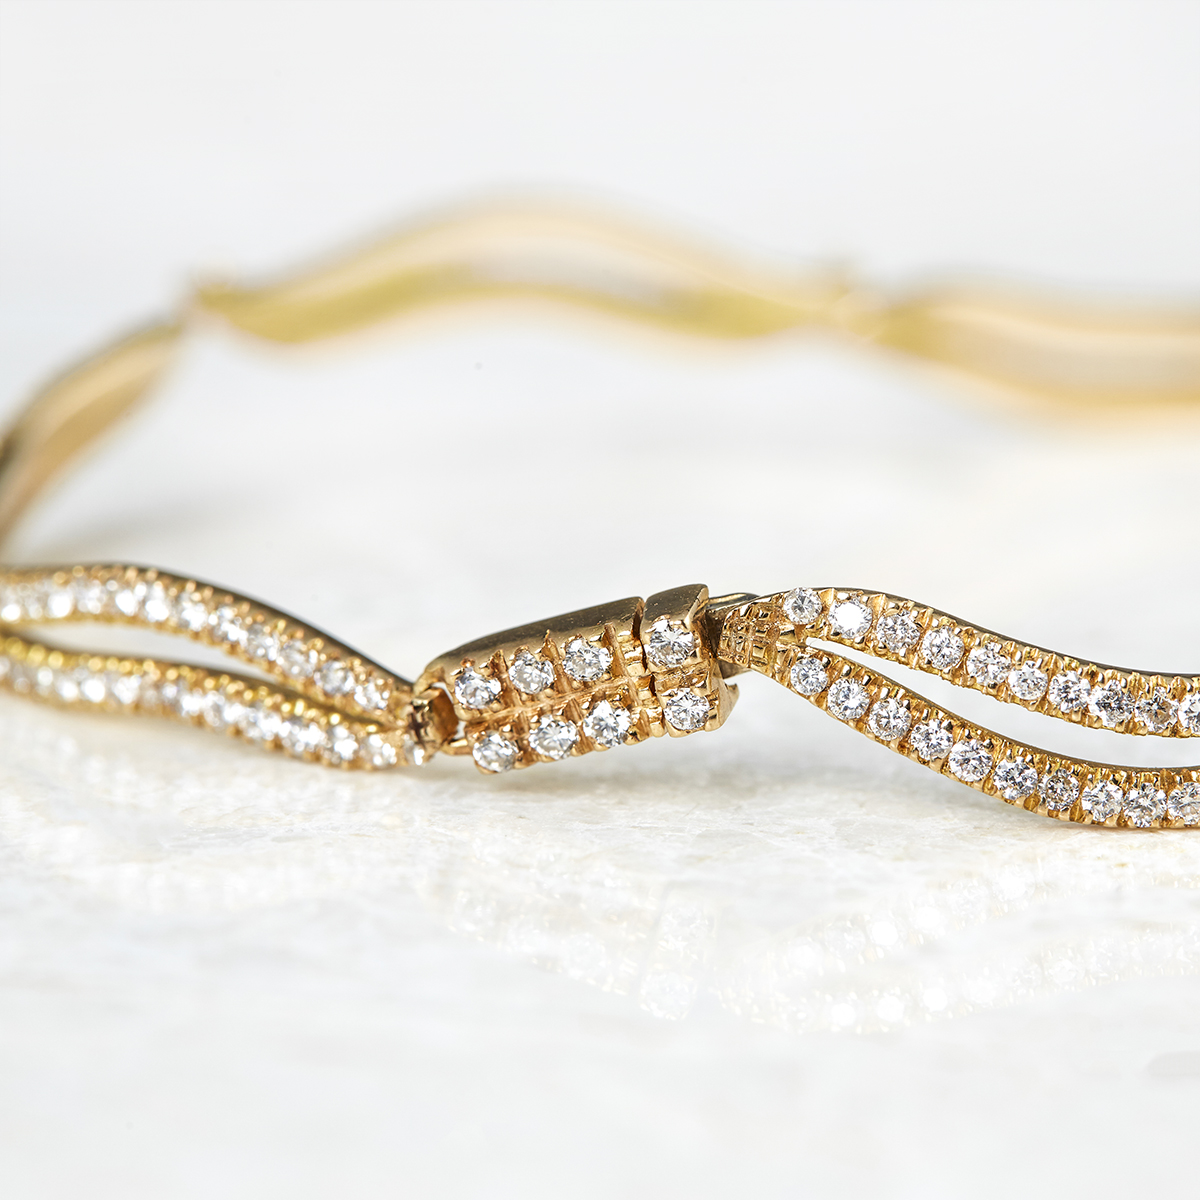 Unbranded 18k Yellow Gold 2.56ct Diamond Wavy Link Bracelet - Image 4 of 6